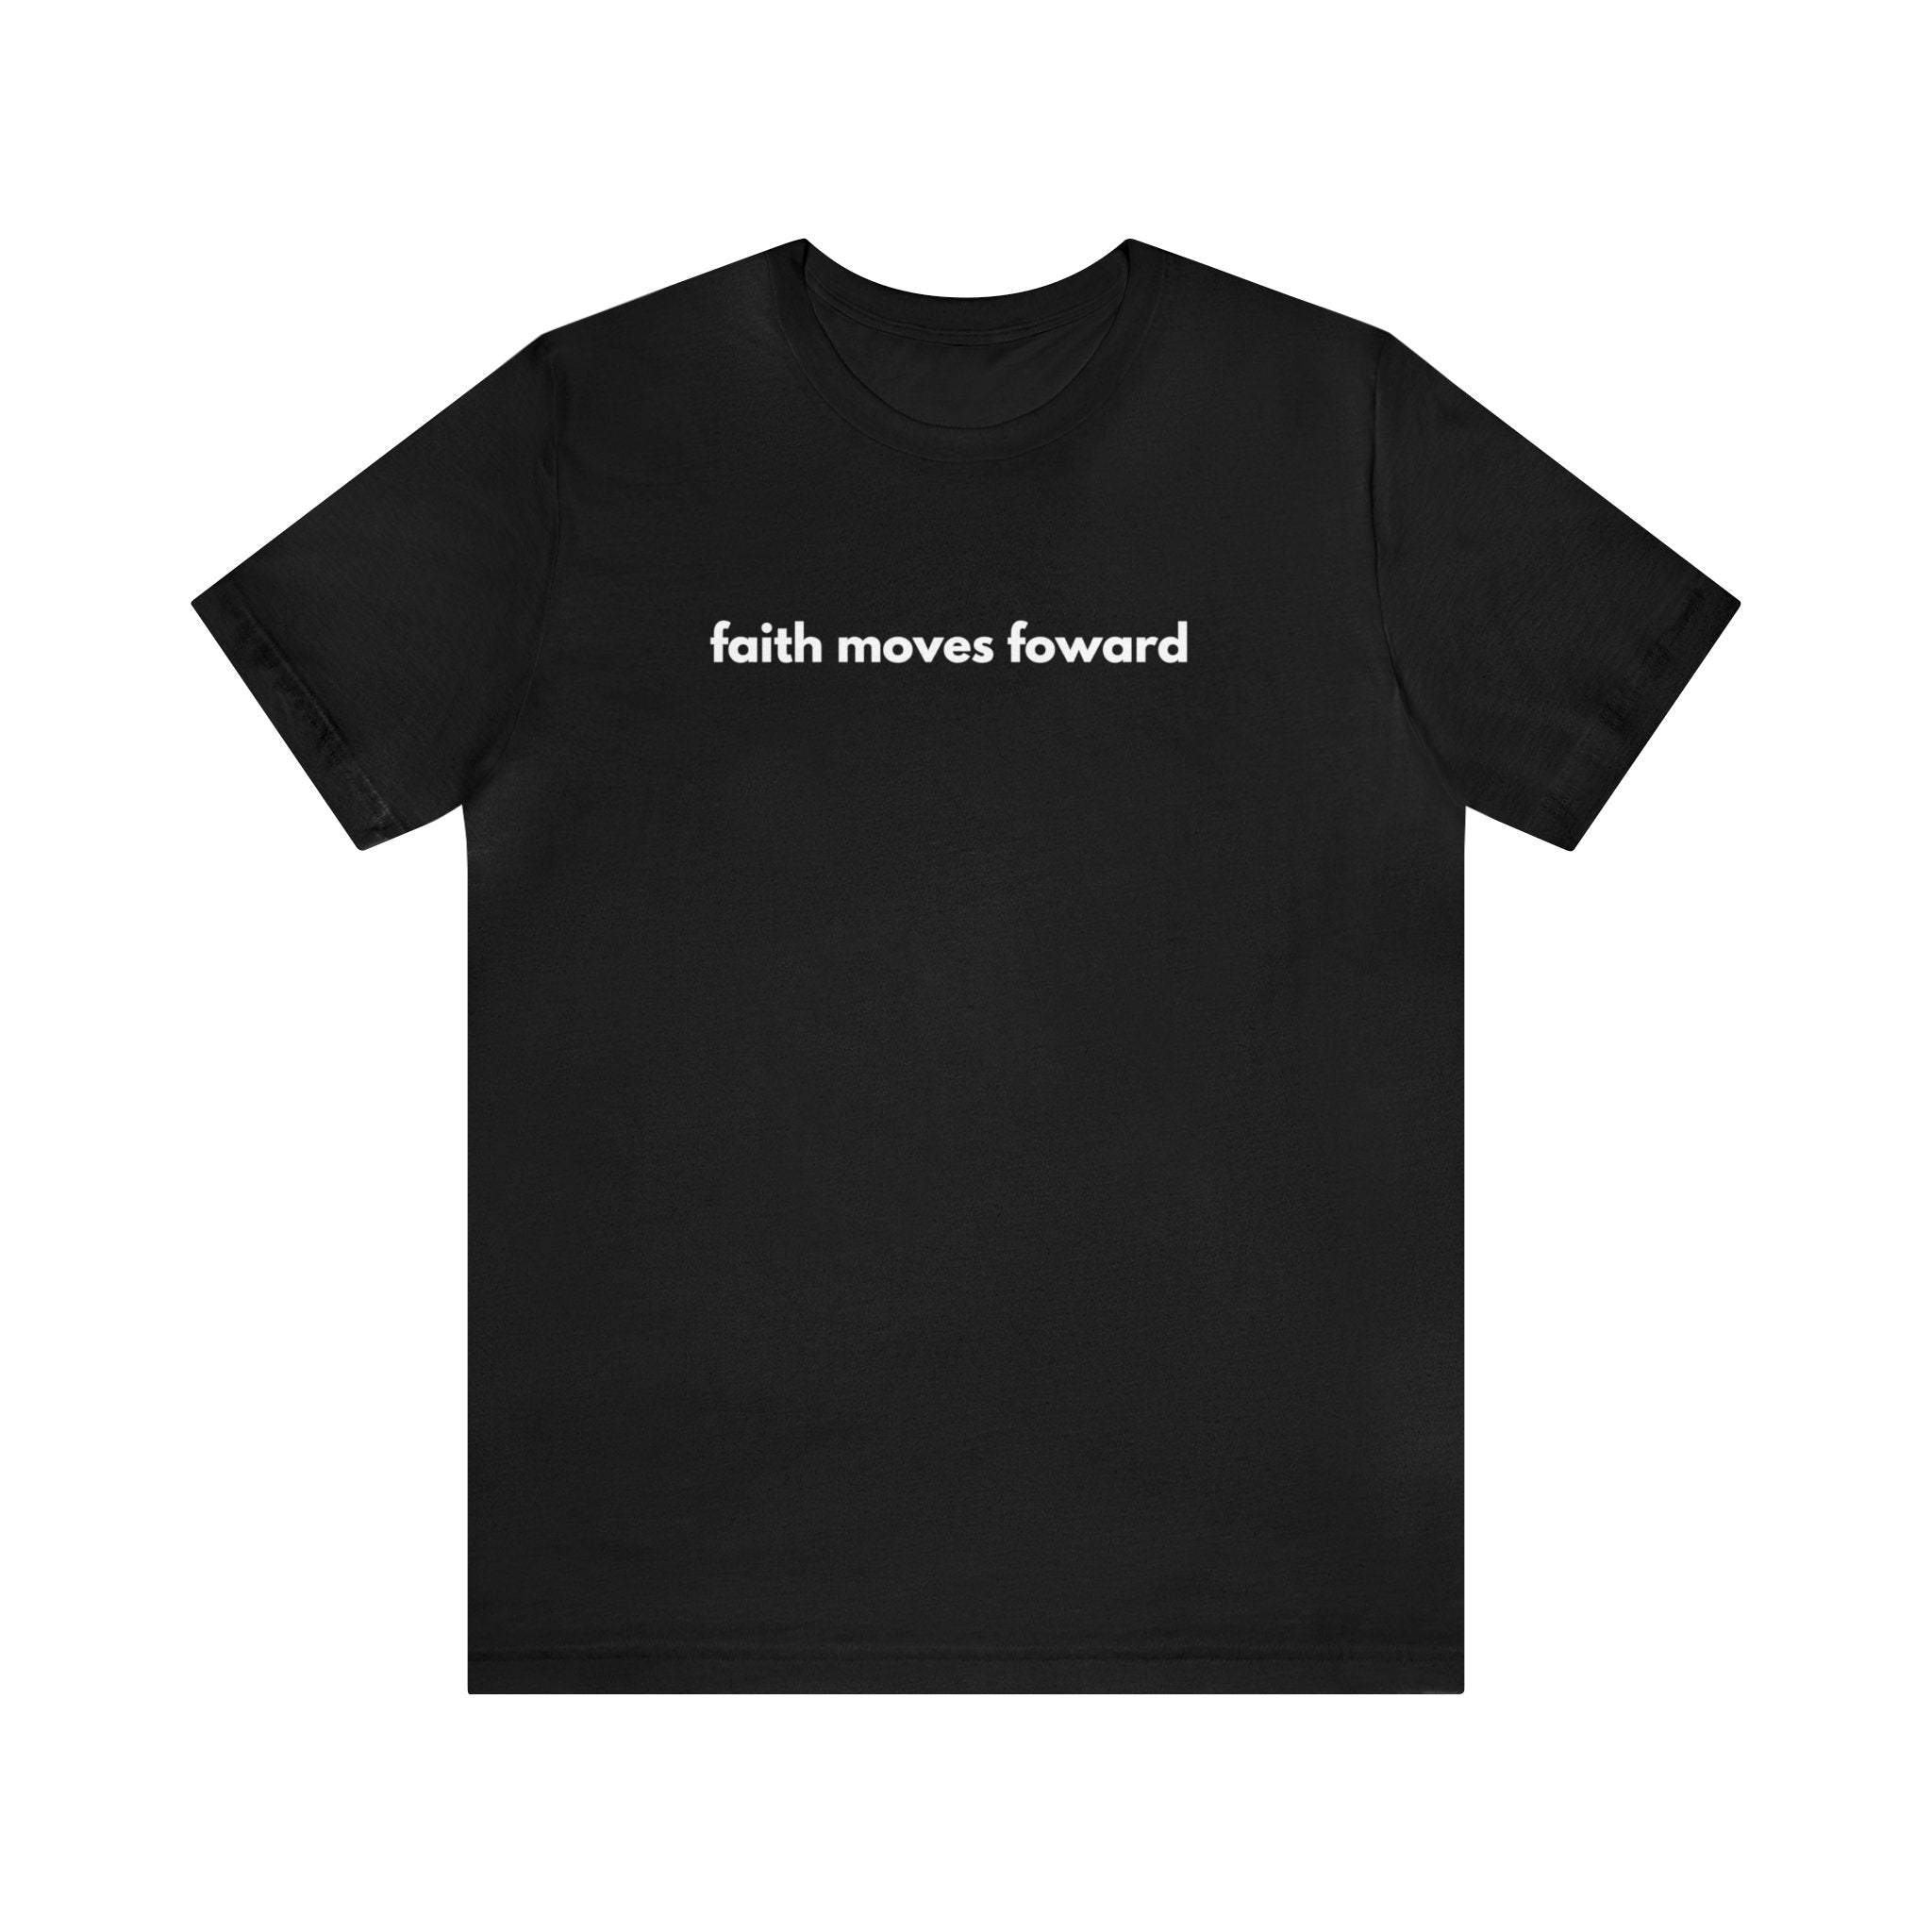 Faith Move Shirt: Trust in God's Guidance - Inspirational Christian Apparel